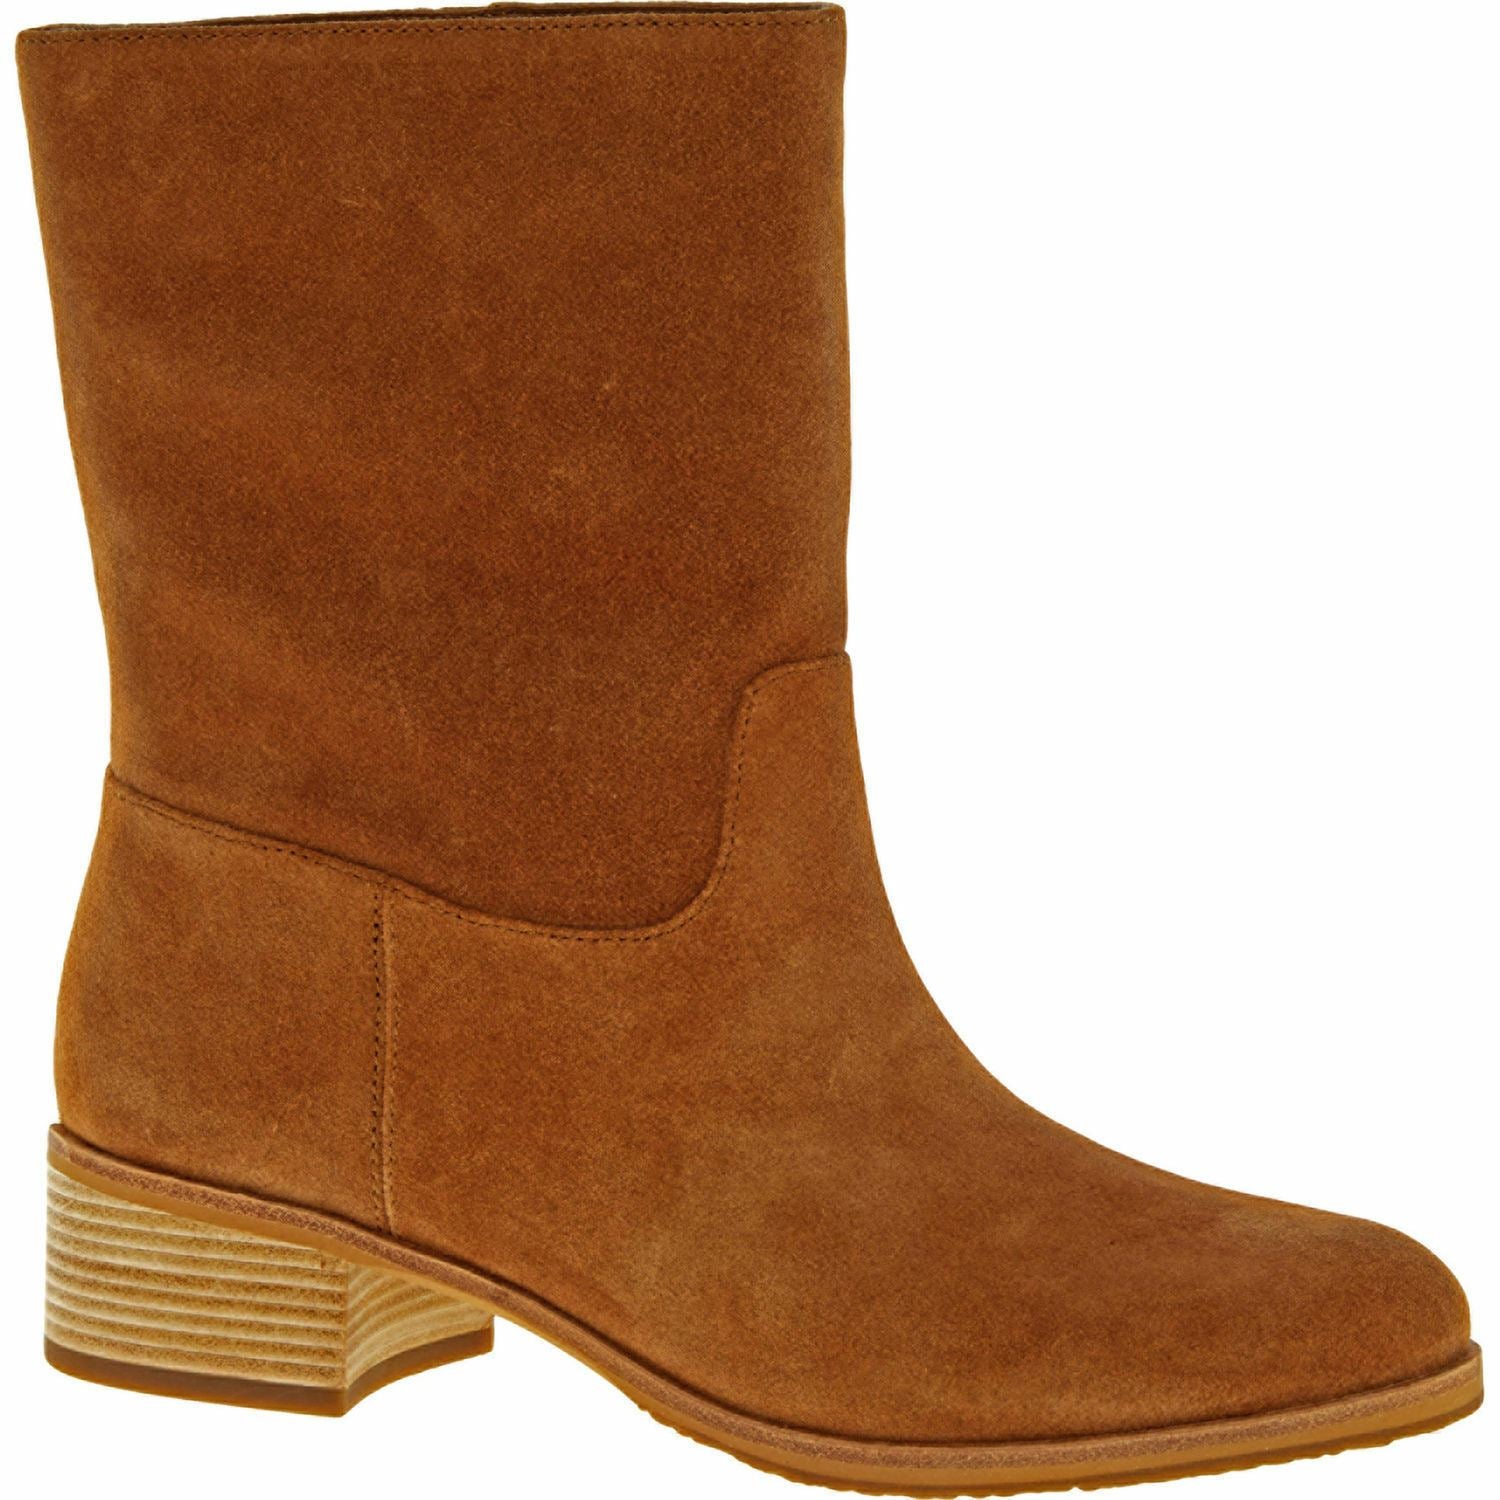 MICHAEL KORS Women's PIERCE Camel Brown Suede Ankle Boots, size UK 5.5